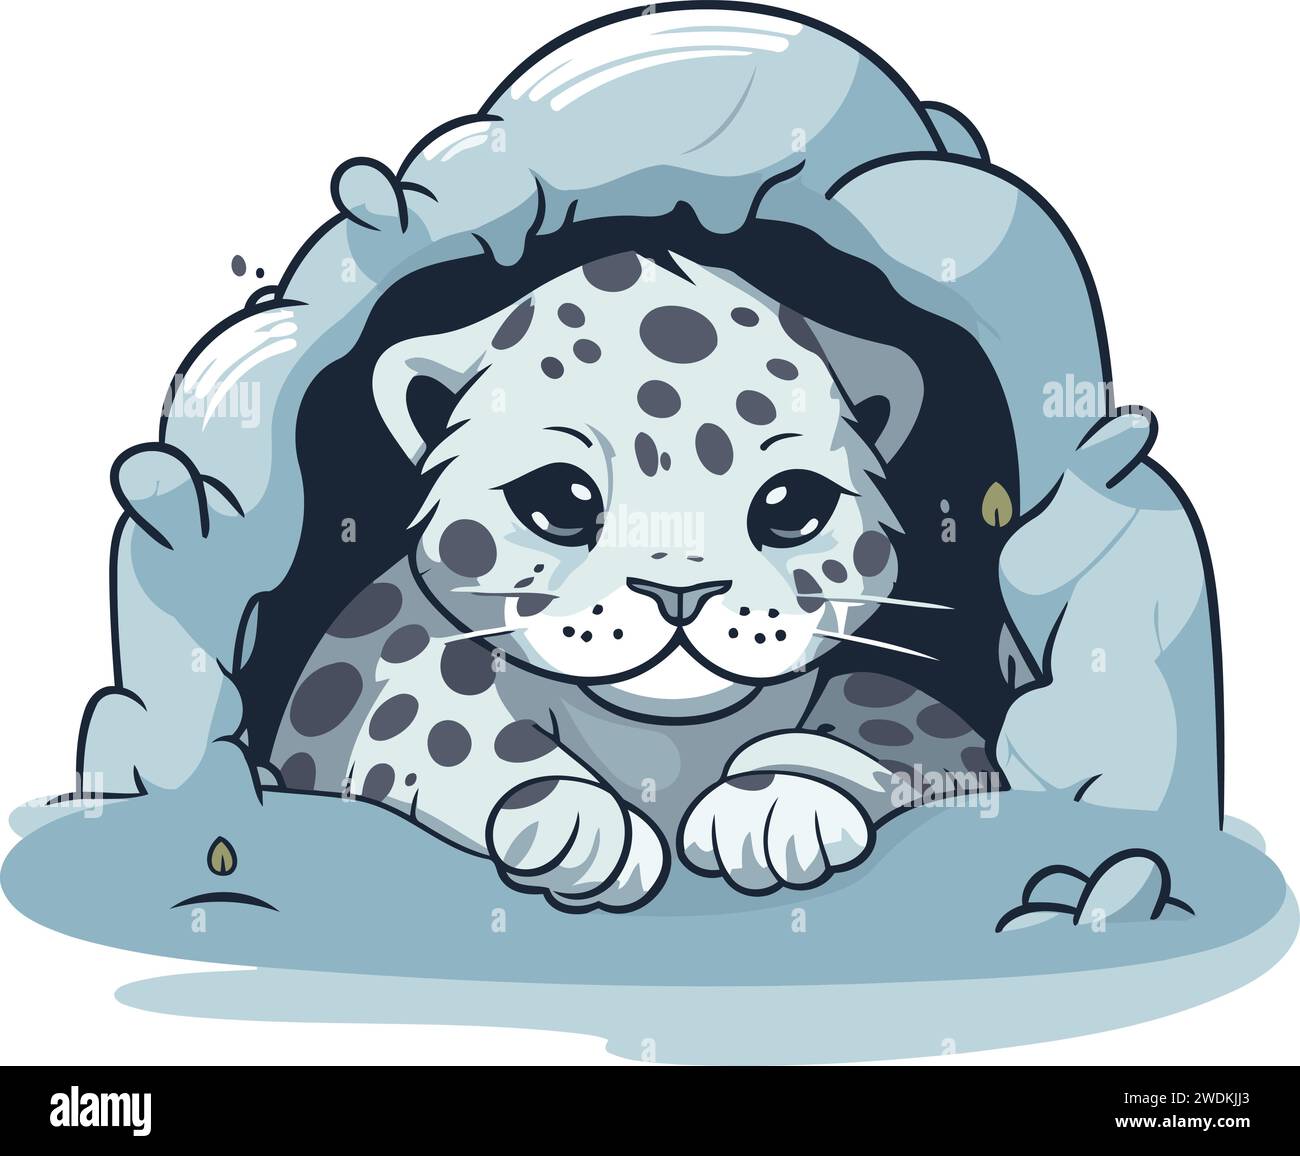 Vector illustration of a cute cartoon snow leopard in a hood. Stock Vector